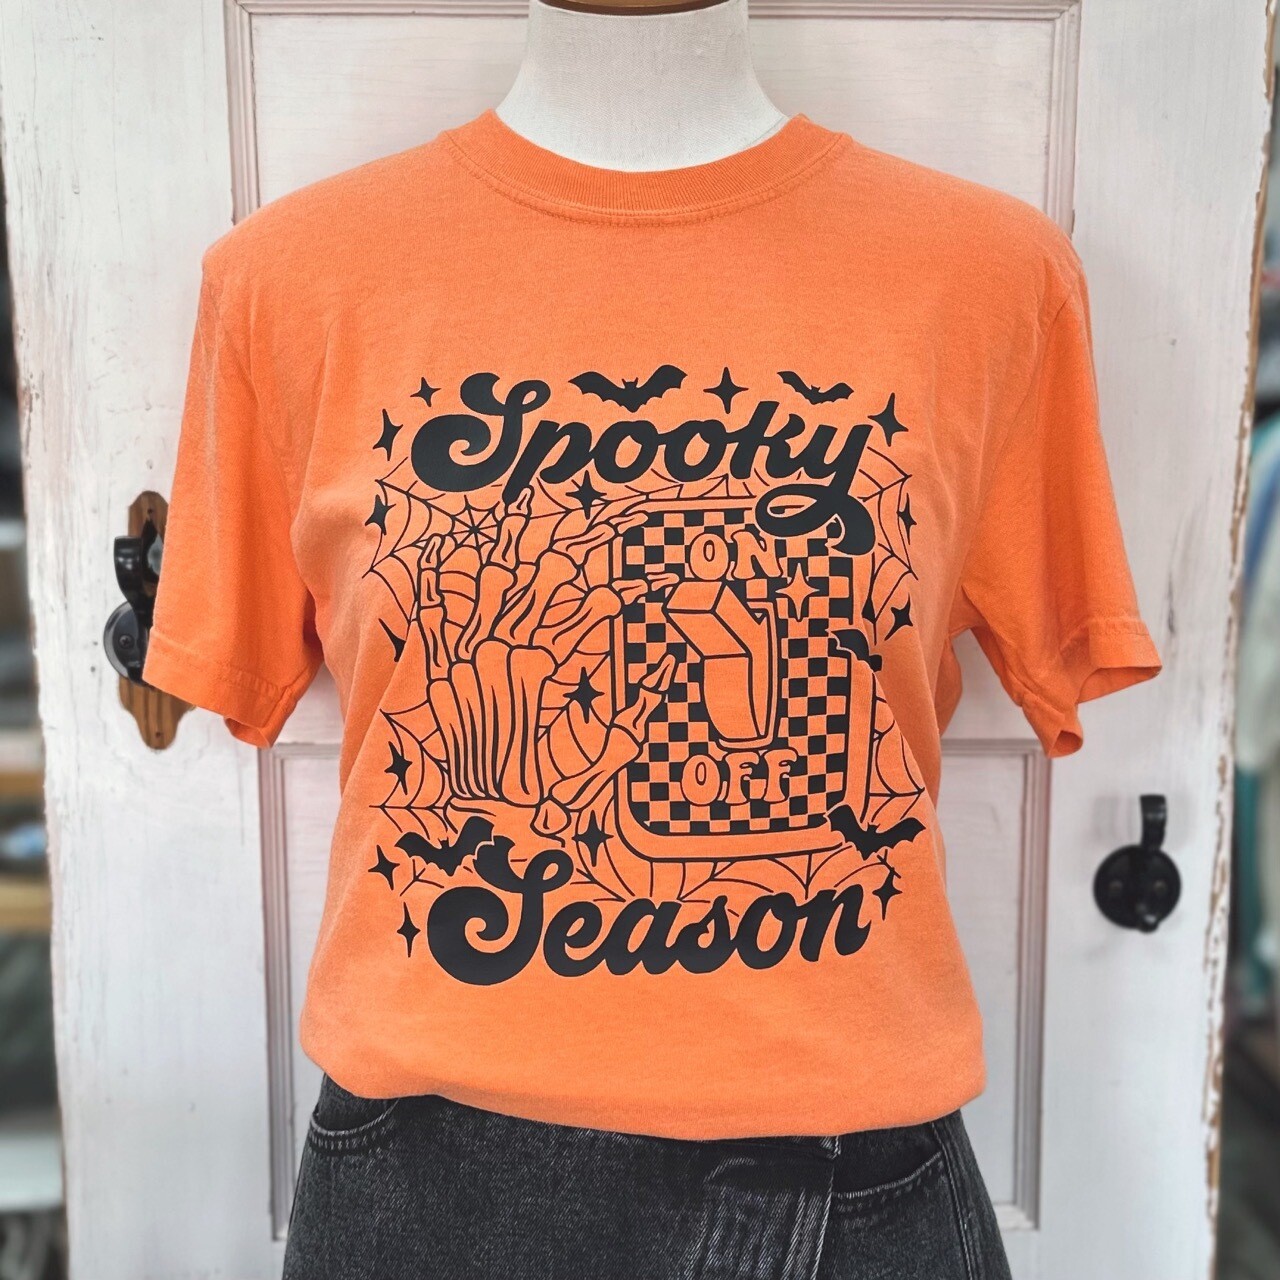 Spooky Season T-Shirt